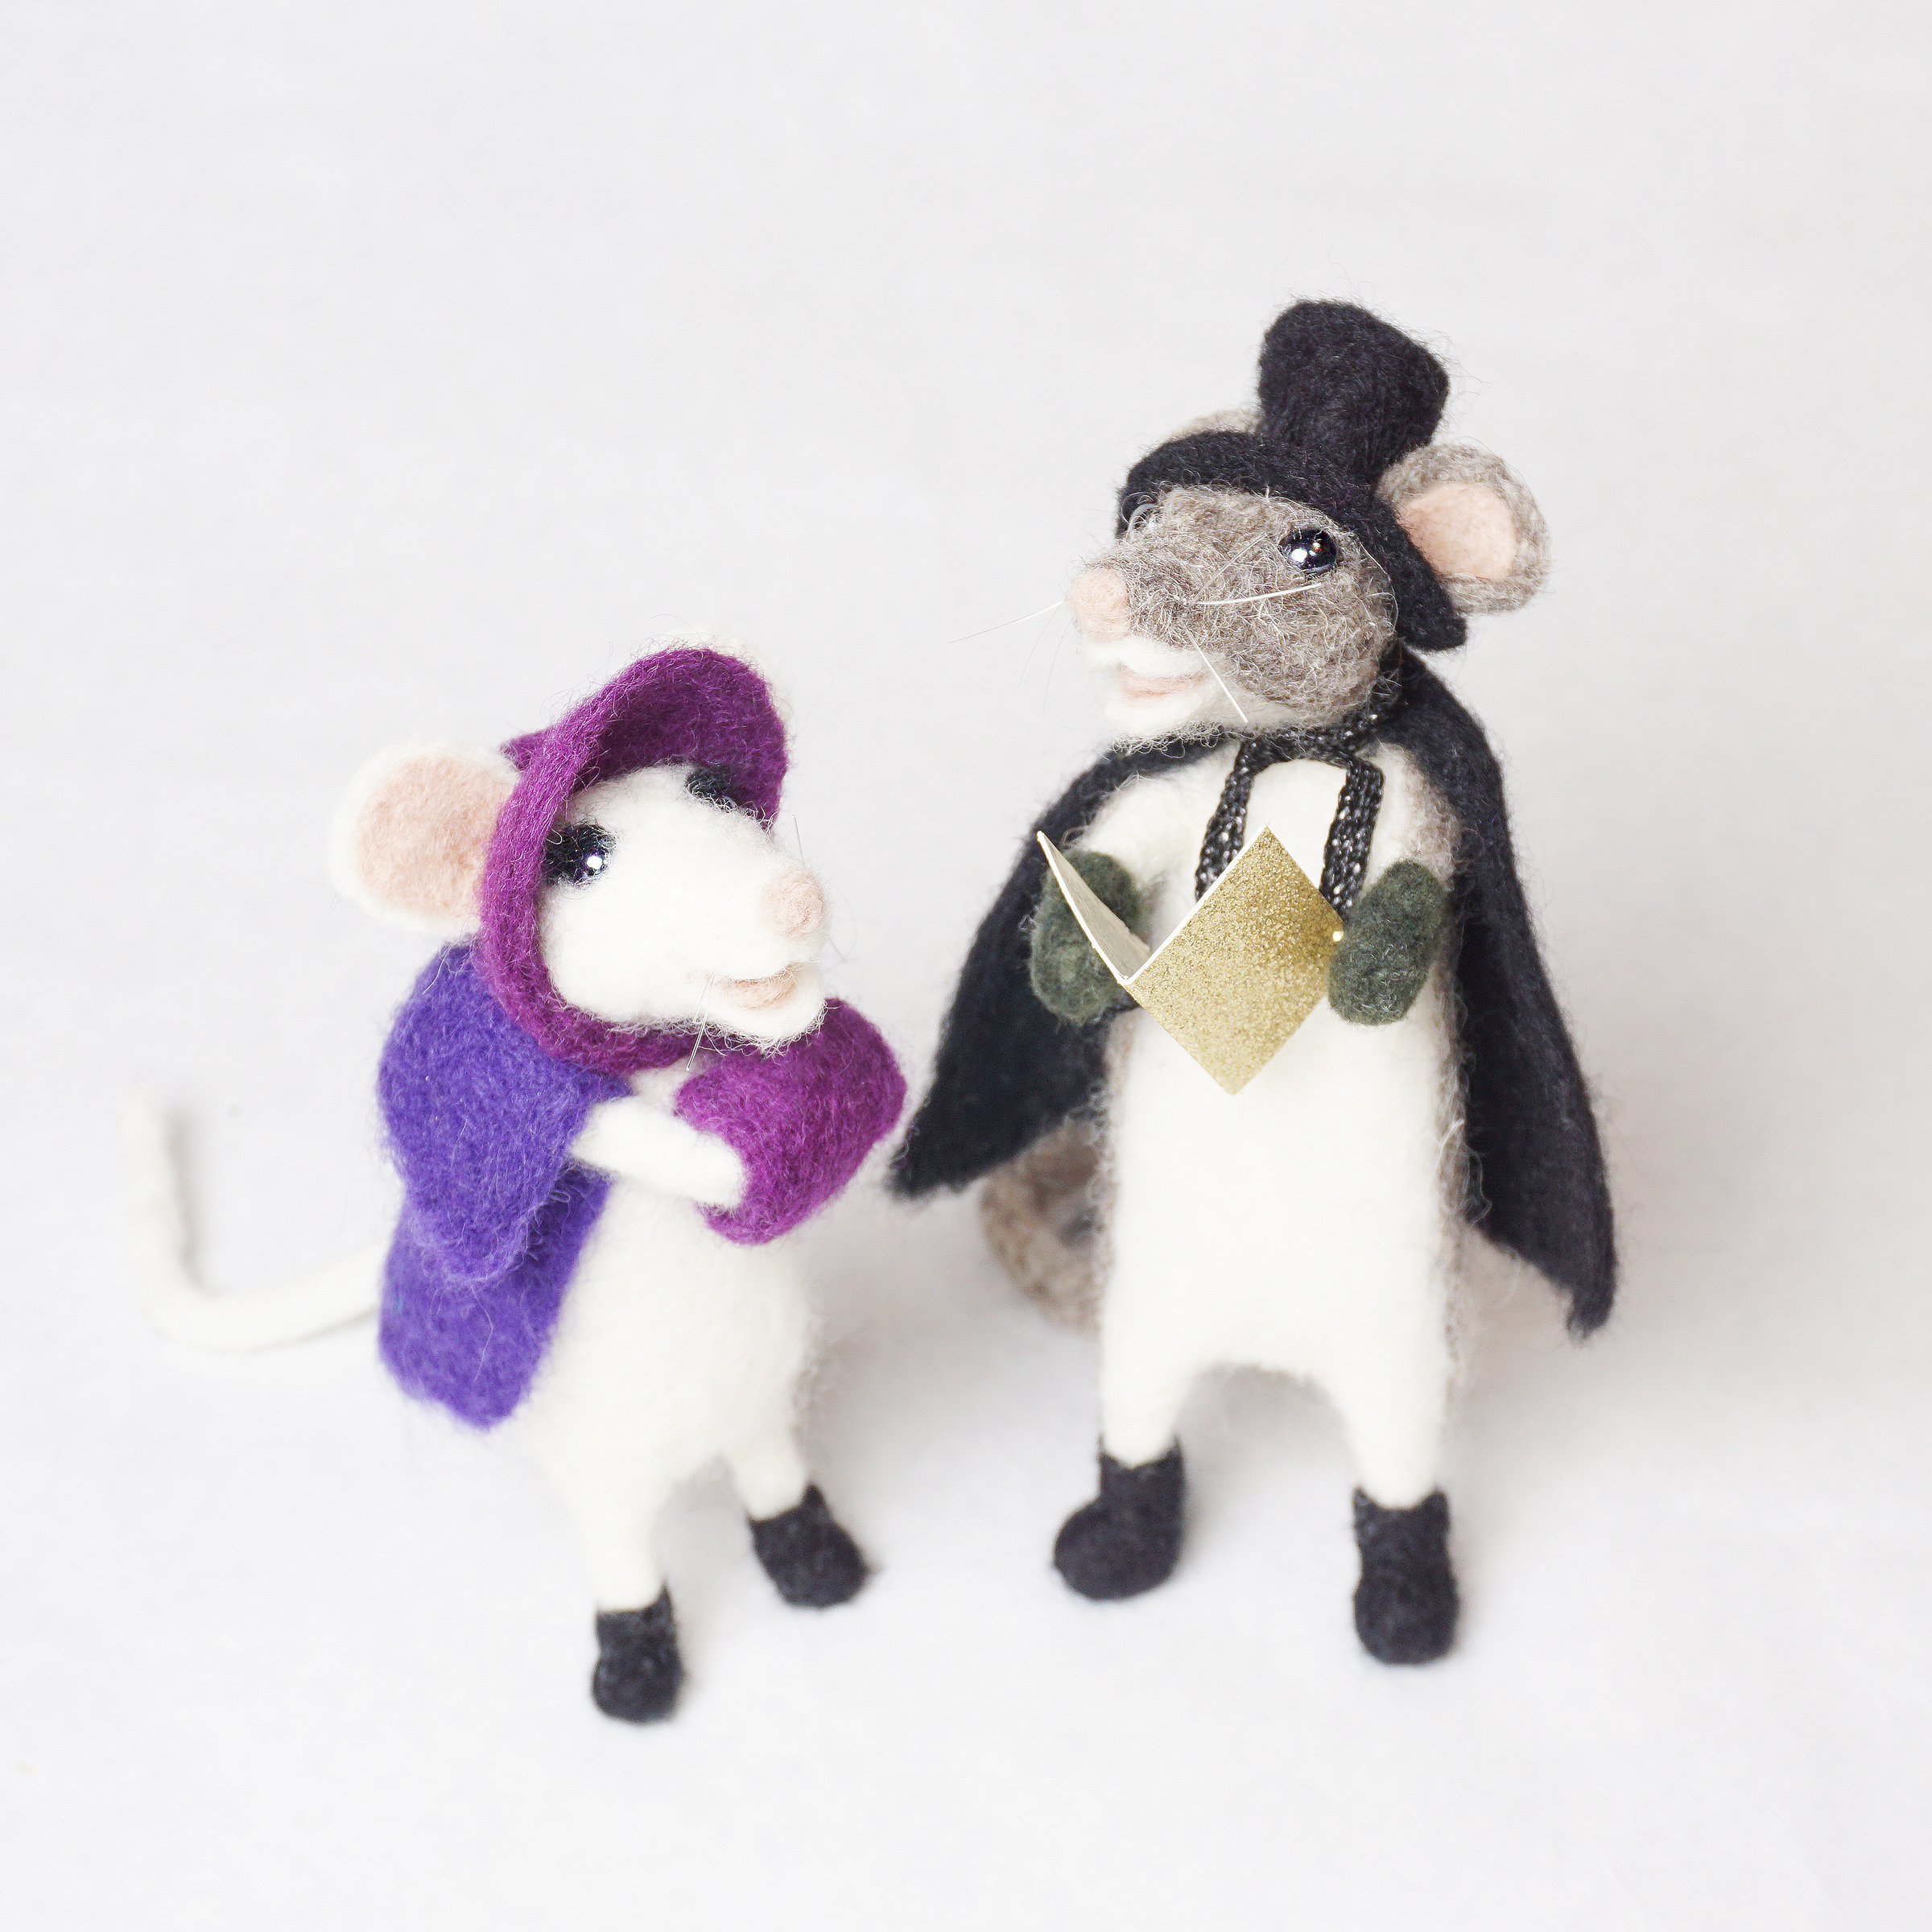 Pair of carol singing mice in victorian costume.